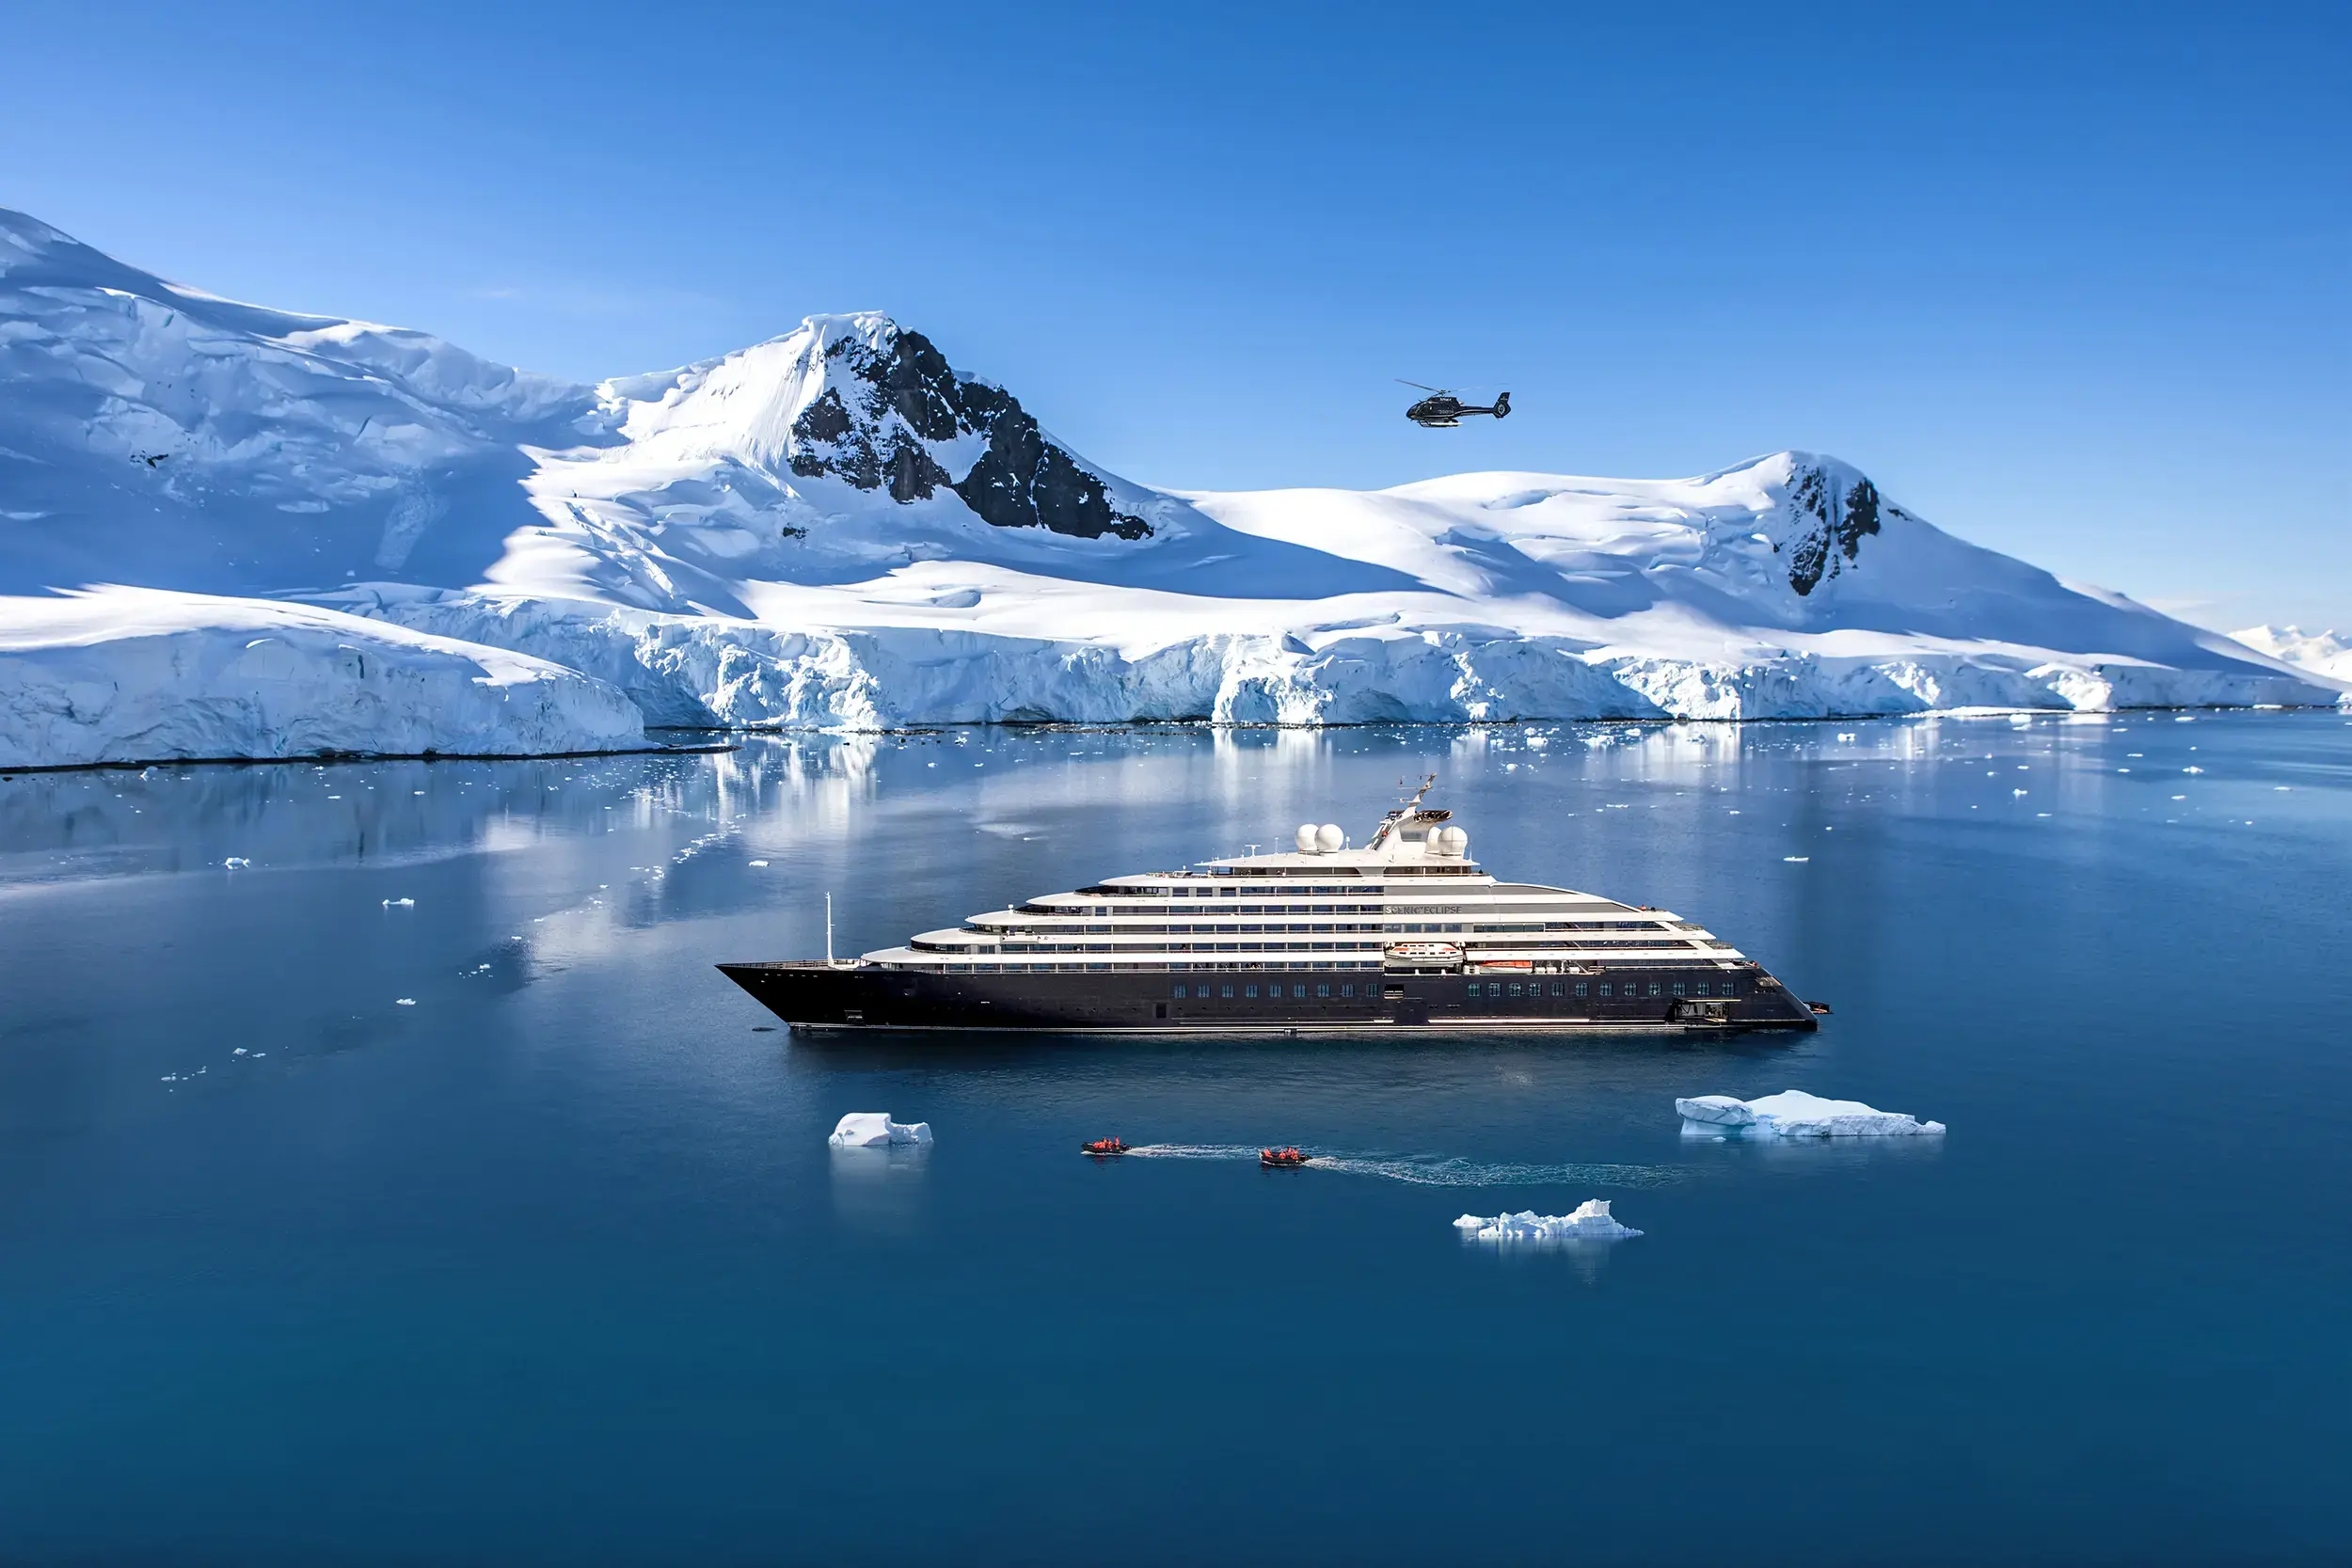 scenic eclipse yacht antarctica